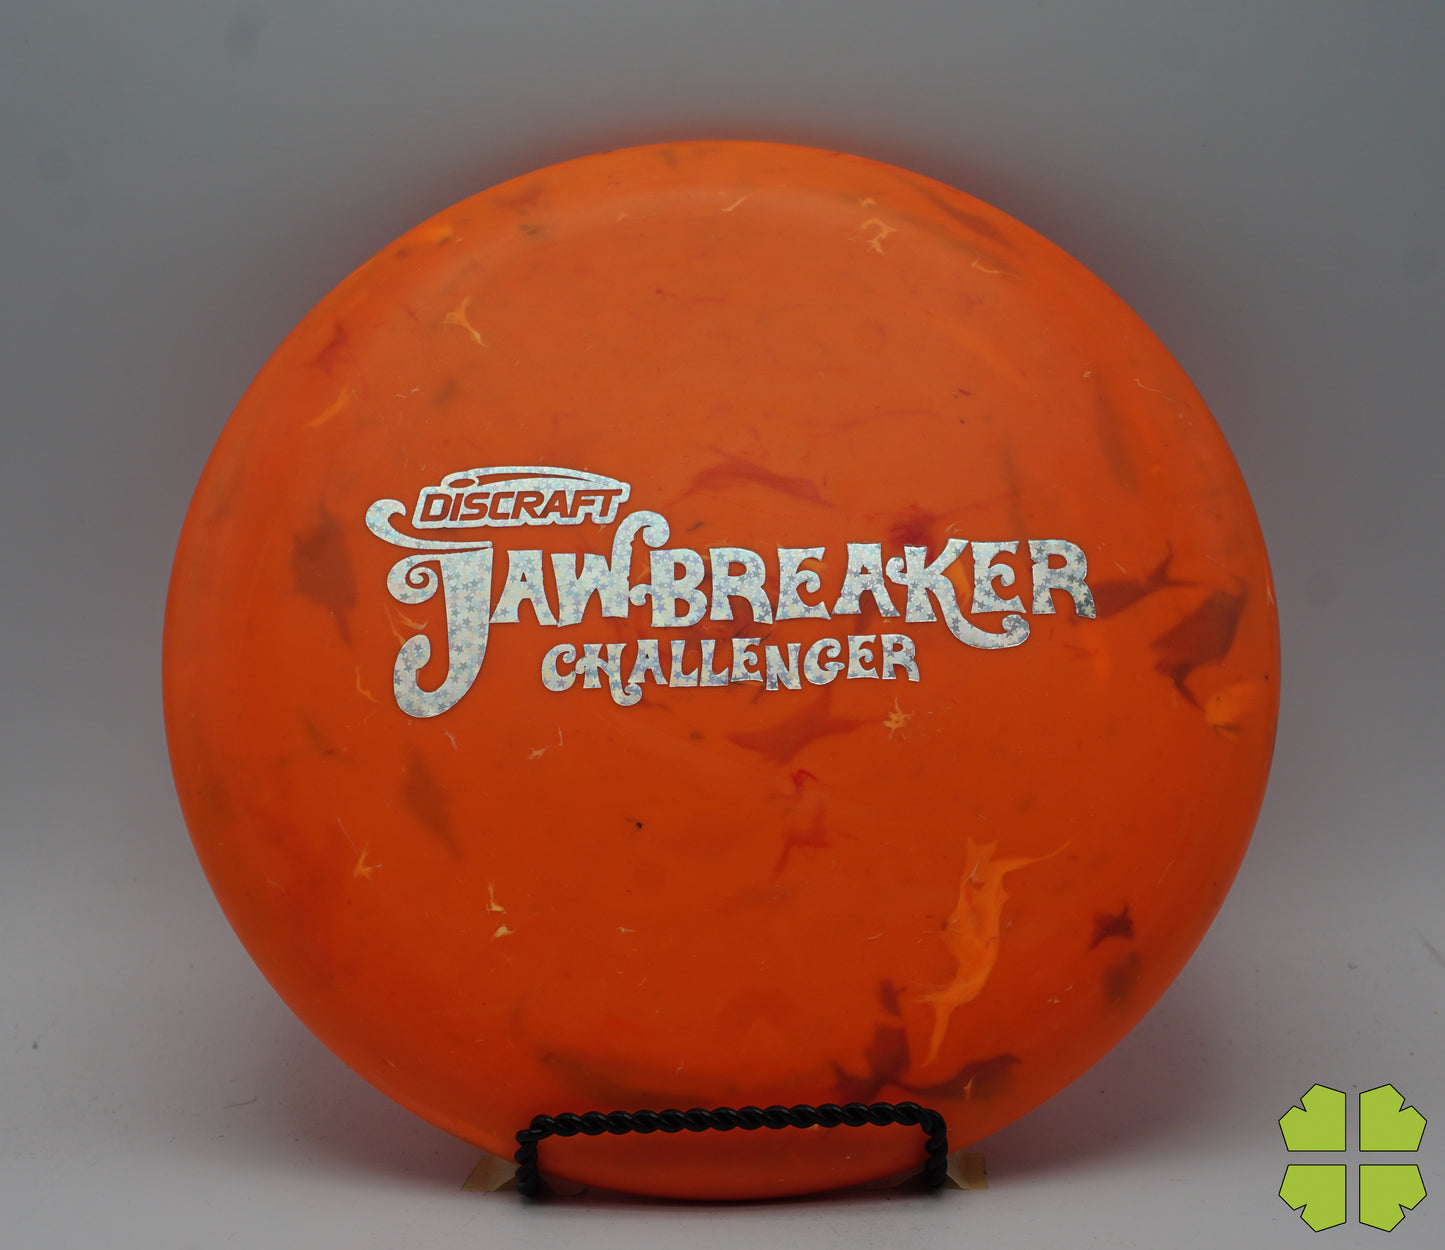 Jawbreaker Challenger